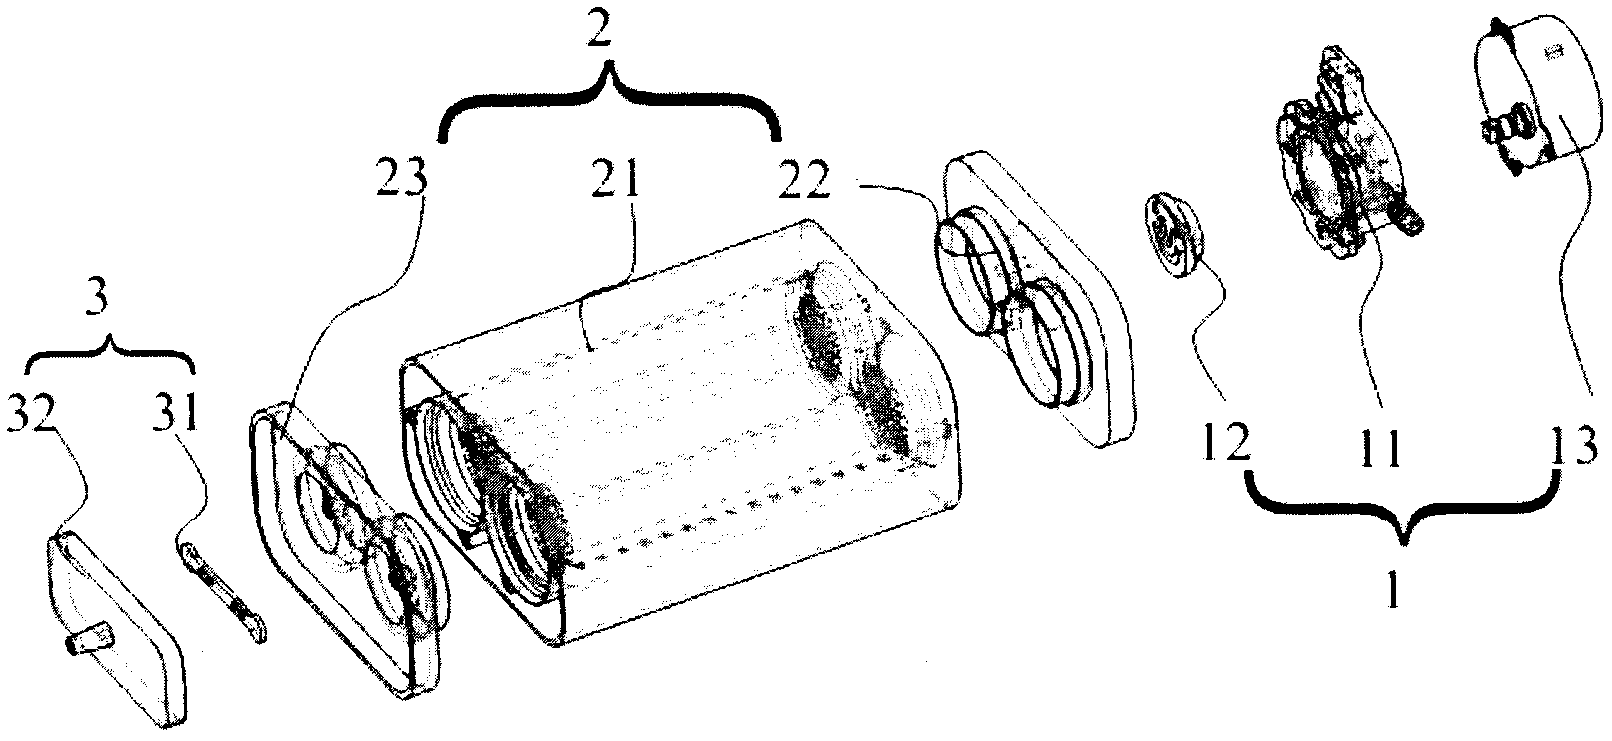 Nitrogen-oxygen separation device and corresponding oxygenerator